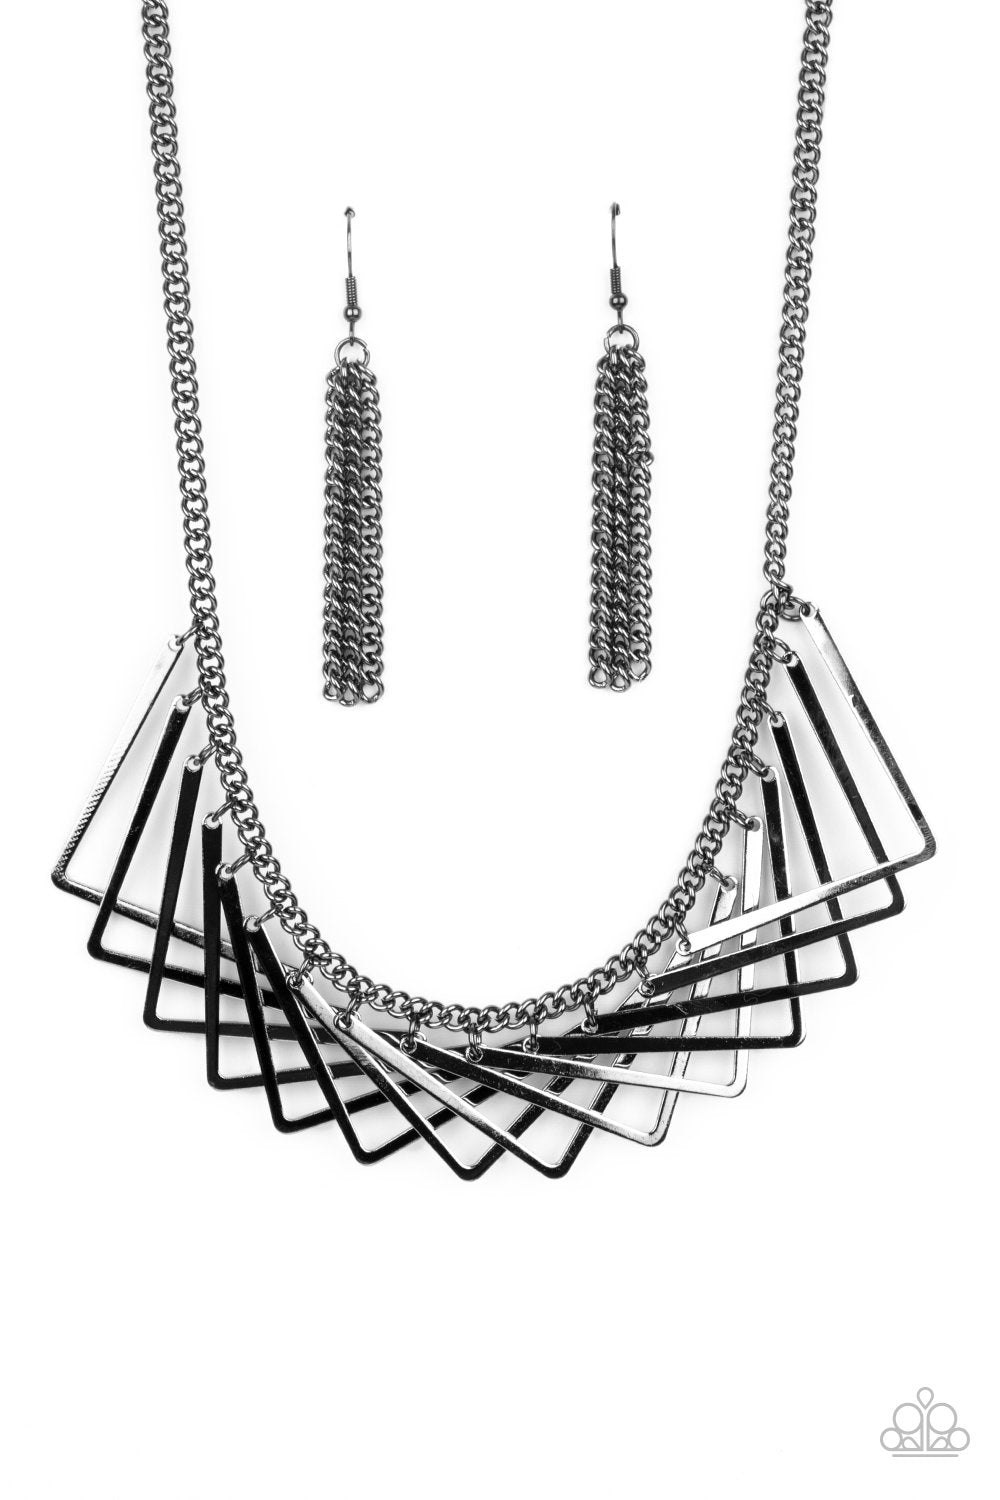 Metro Mirage Gunmetal Black Necklace - Paparazzi Accessories- lightbox - CarasShop.com - $5 Jewelry by Cara Jewels